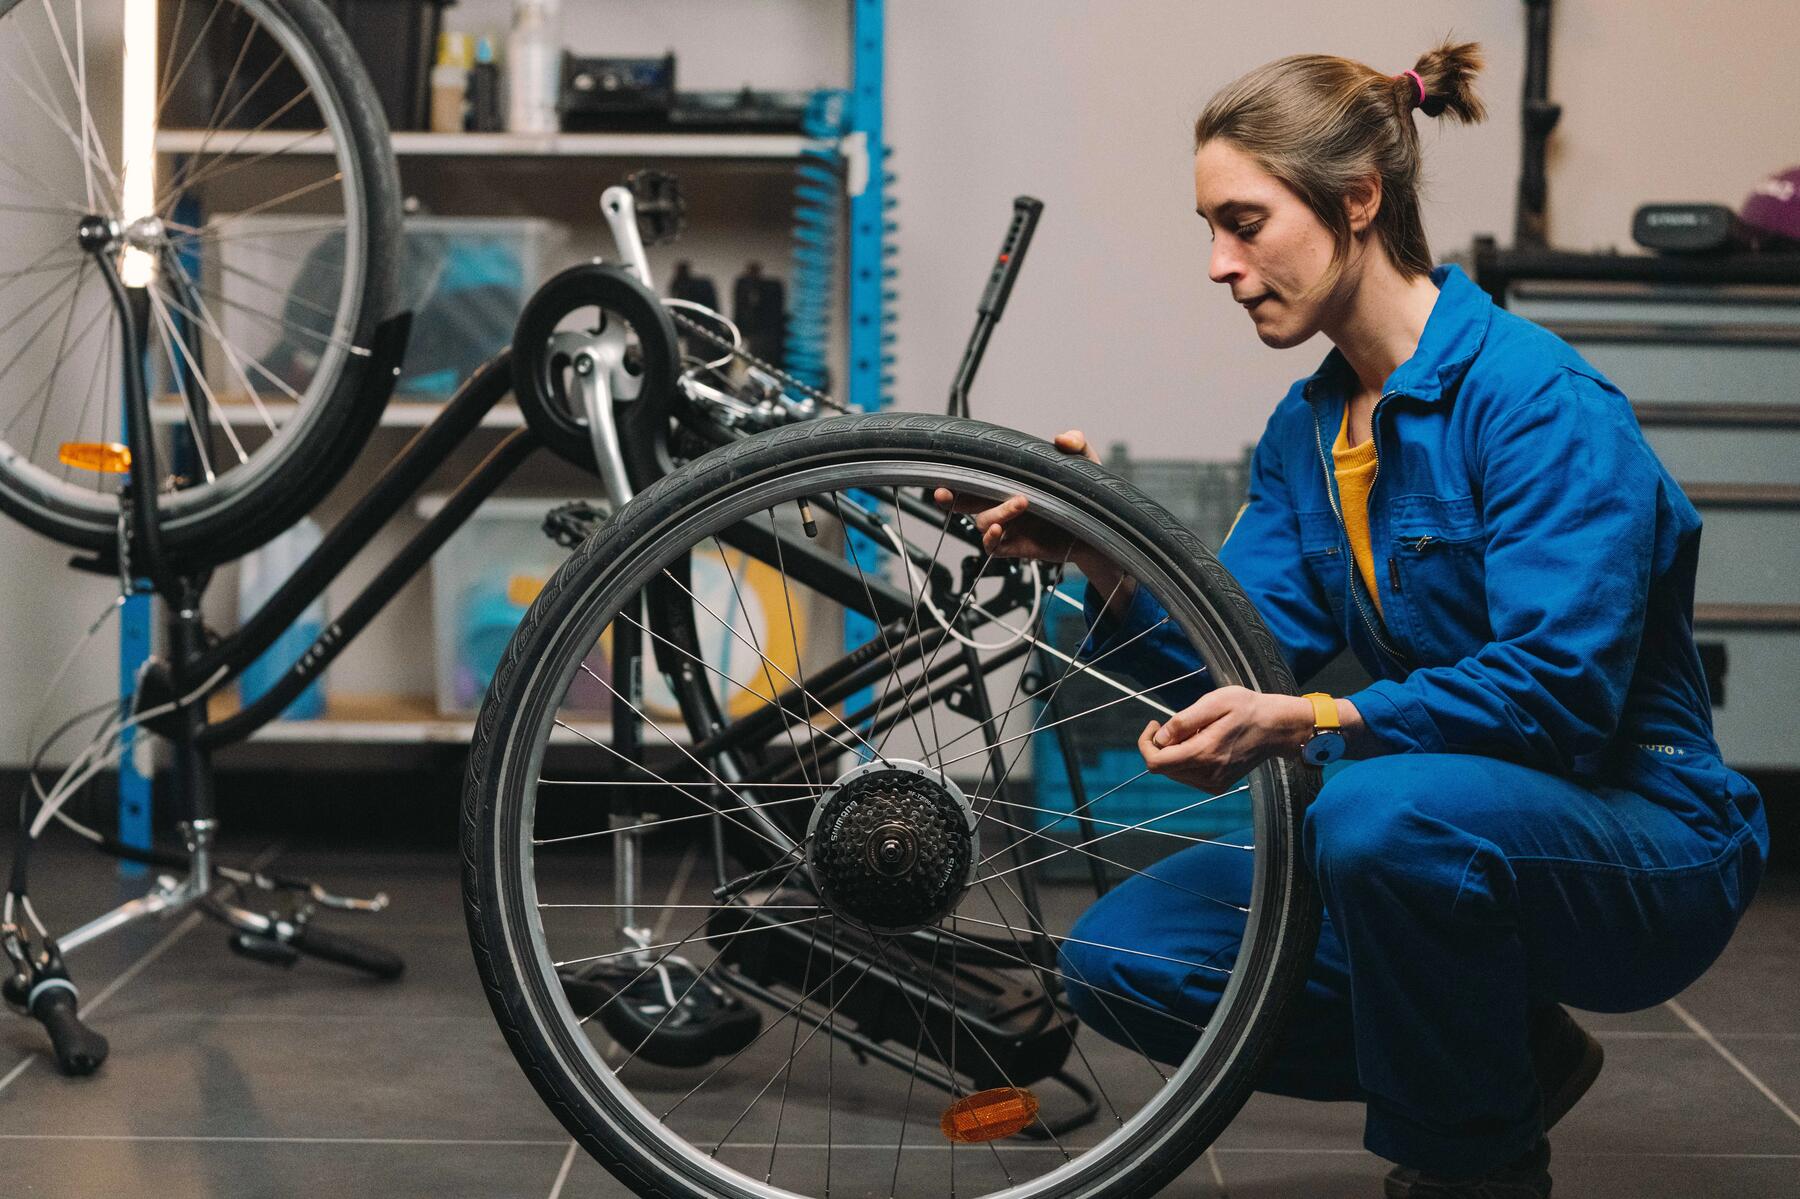 Lady repairing a bike